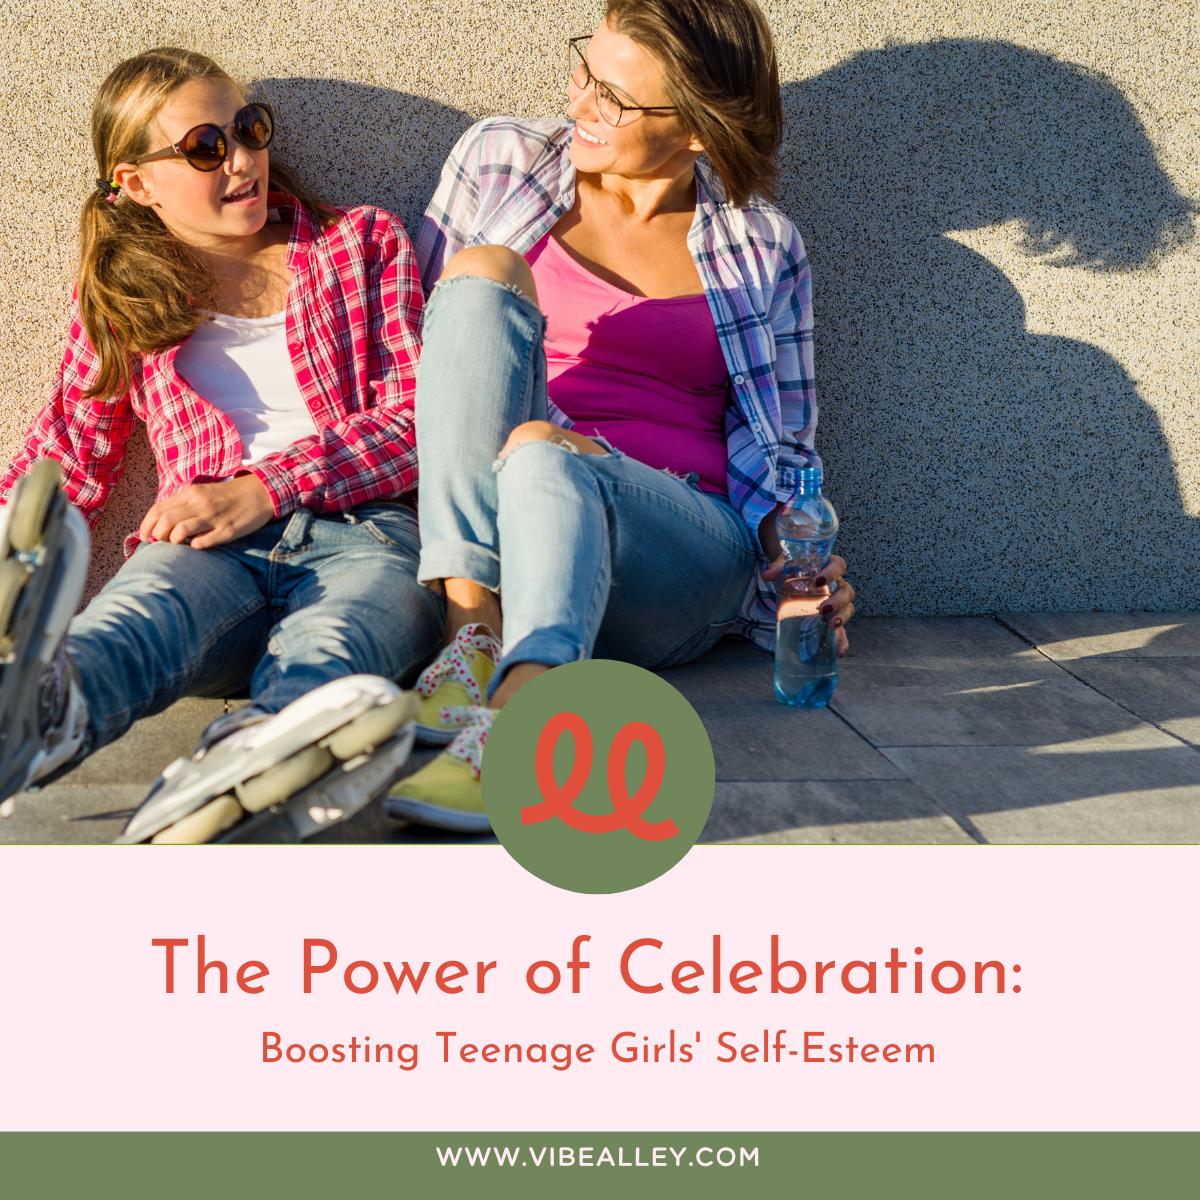 The Power of Celebration: Boosting Teenage Girls' Self-Esteem